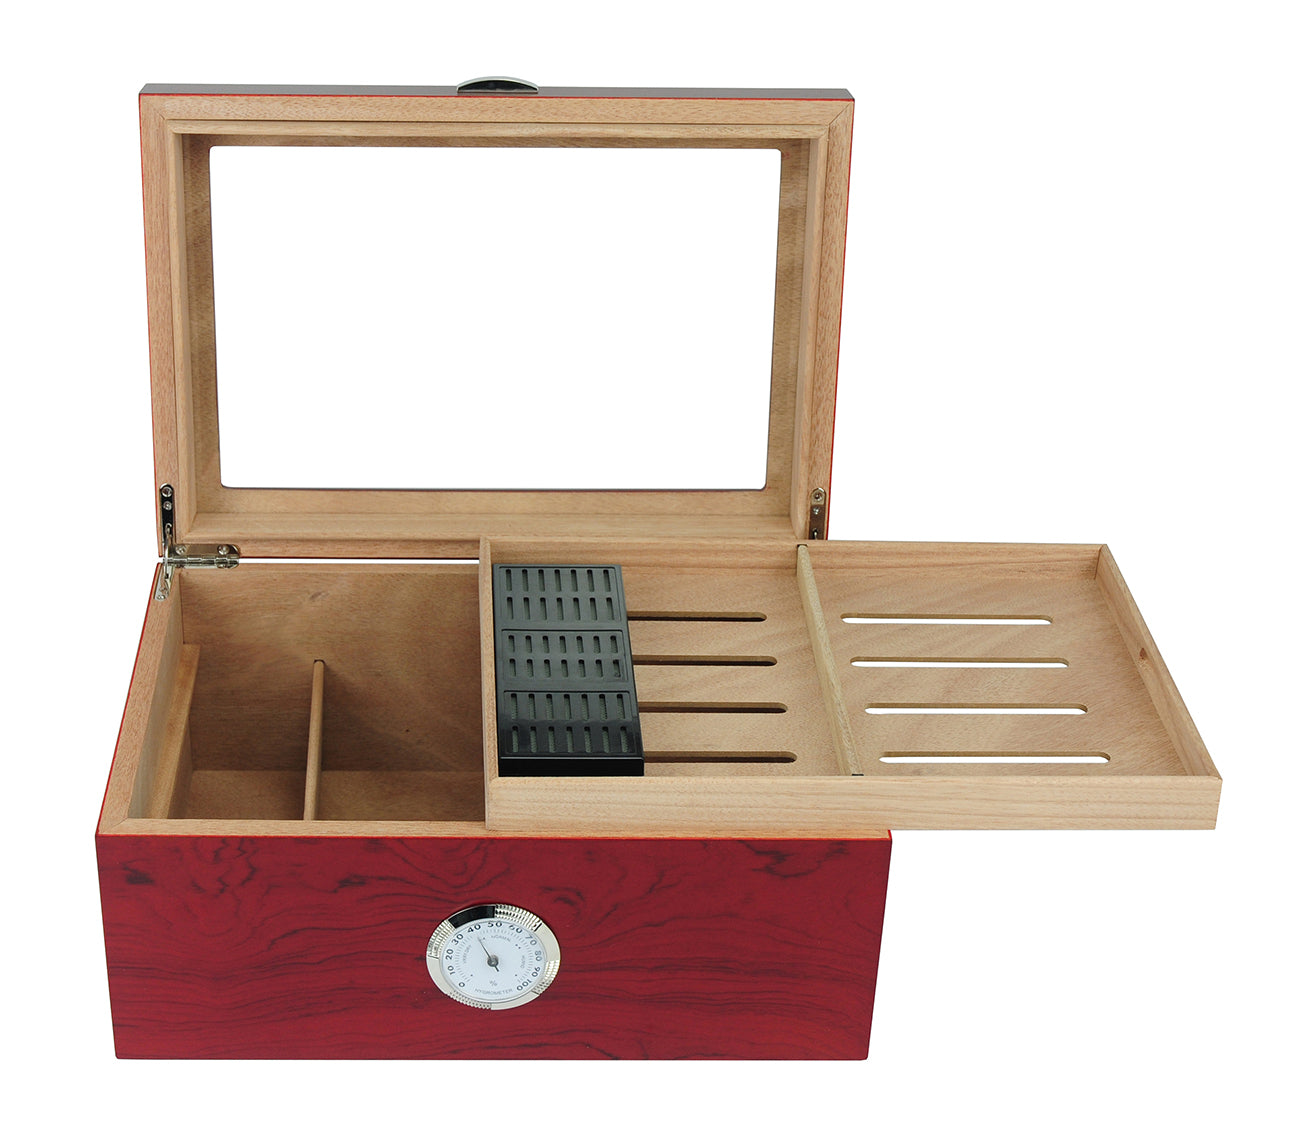 Hand Made 100 Count Cigar Humidor Box Wooden Venner Humidifer with Hygrometer V